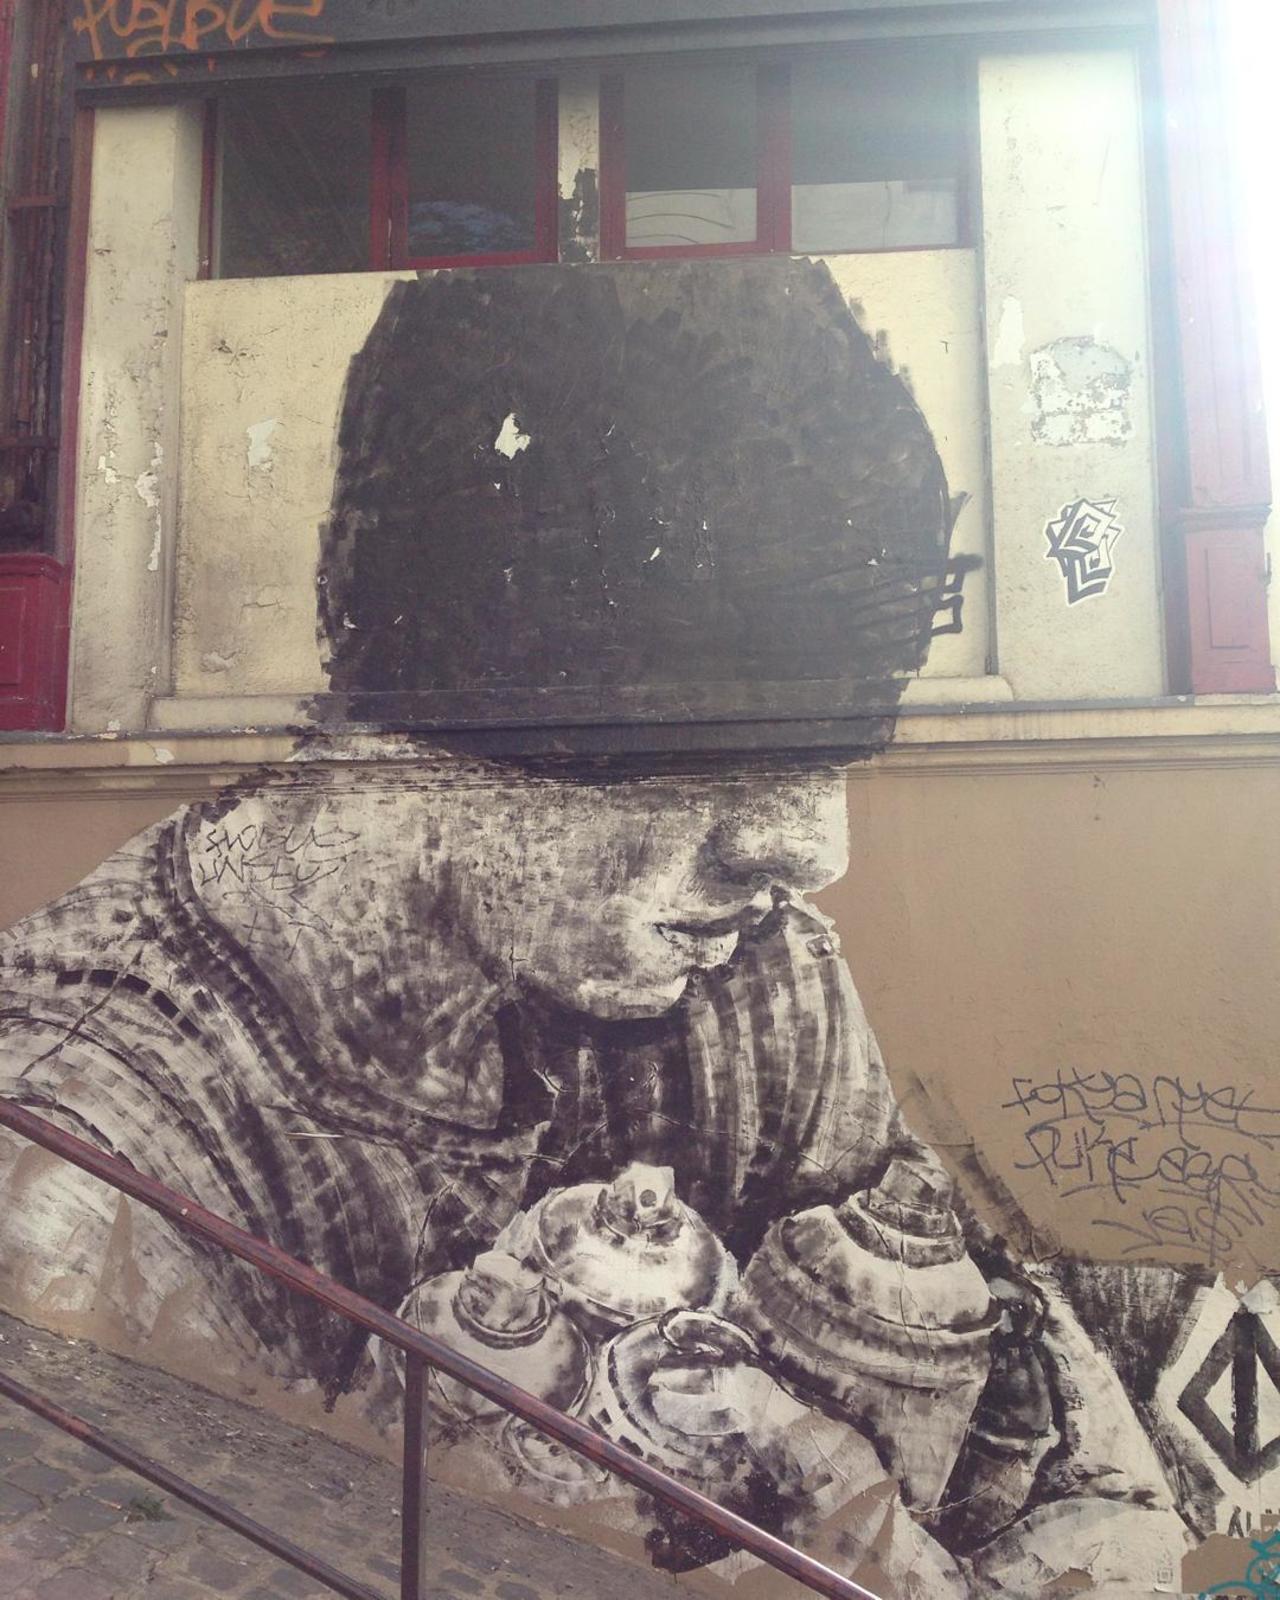 #Paris #graffiti photo by @streetrorart http://ift.tt/1R3B5EG #StreetArt https://t.co/WaBcQI3ksD